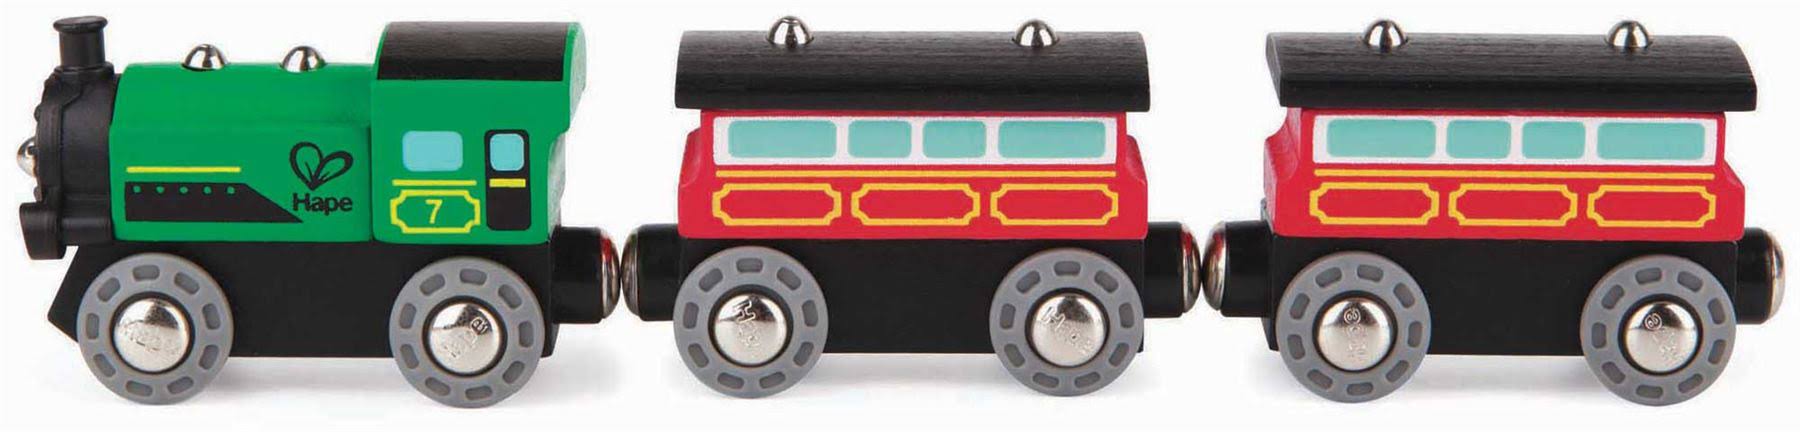 Hape Steam Era Passenger Train Toy